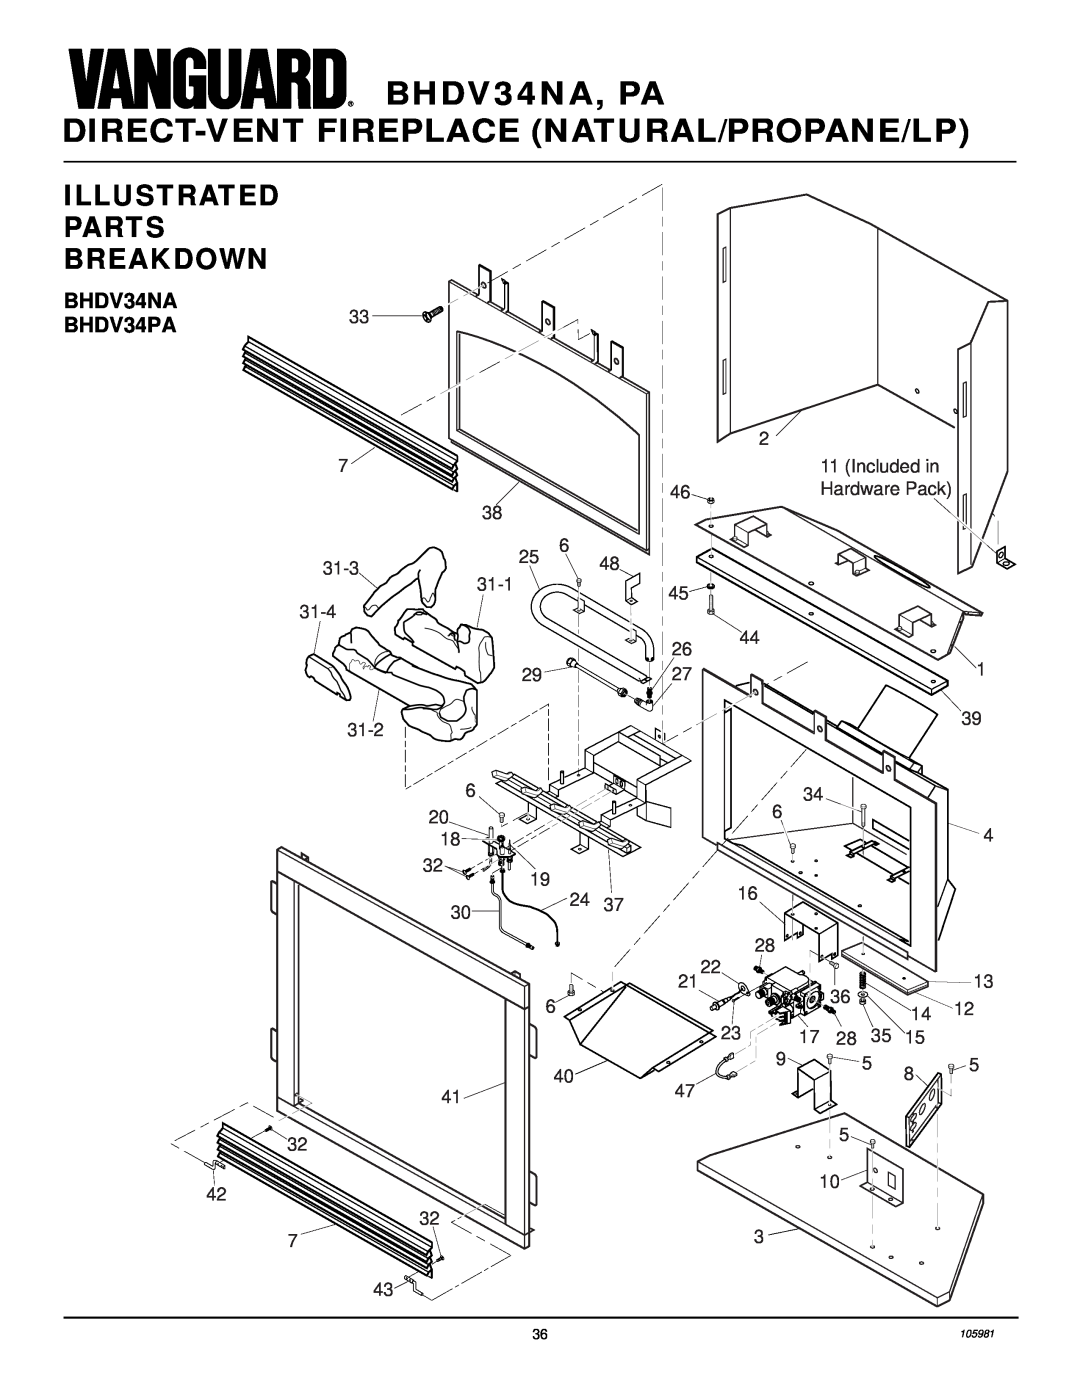 Desa Illustrated Parts Breakdown, BHDV34NA BHDV34PA, BHDV34NA, PA, Direct-Ventfireplace Natural/Propane/Lp 